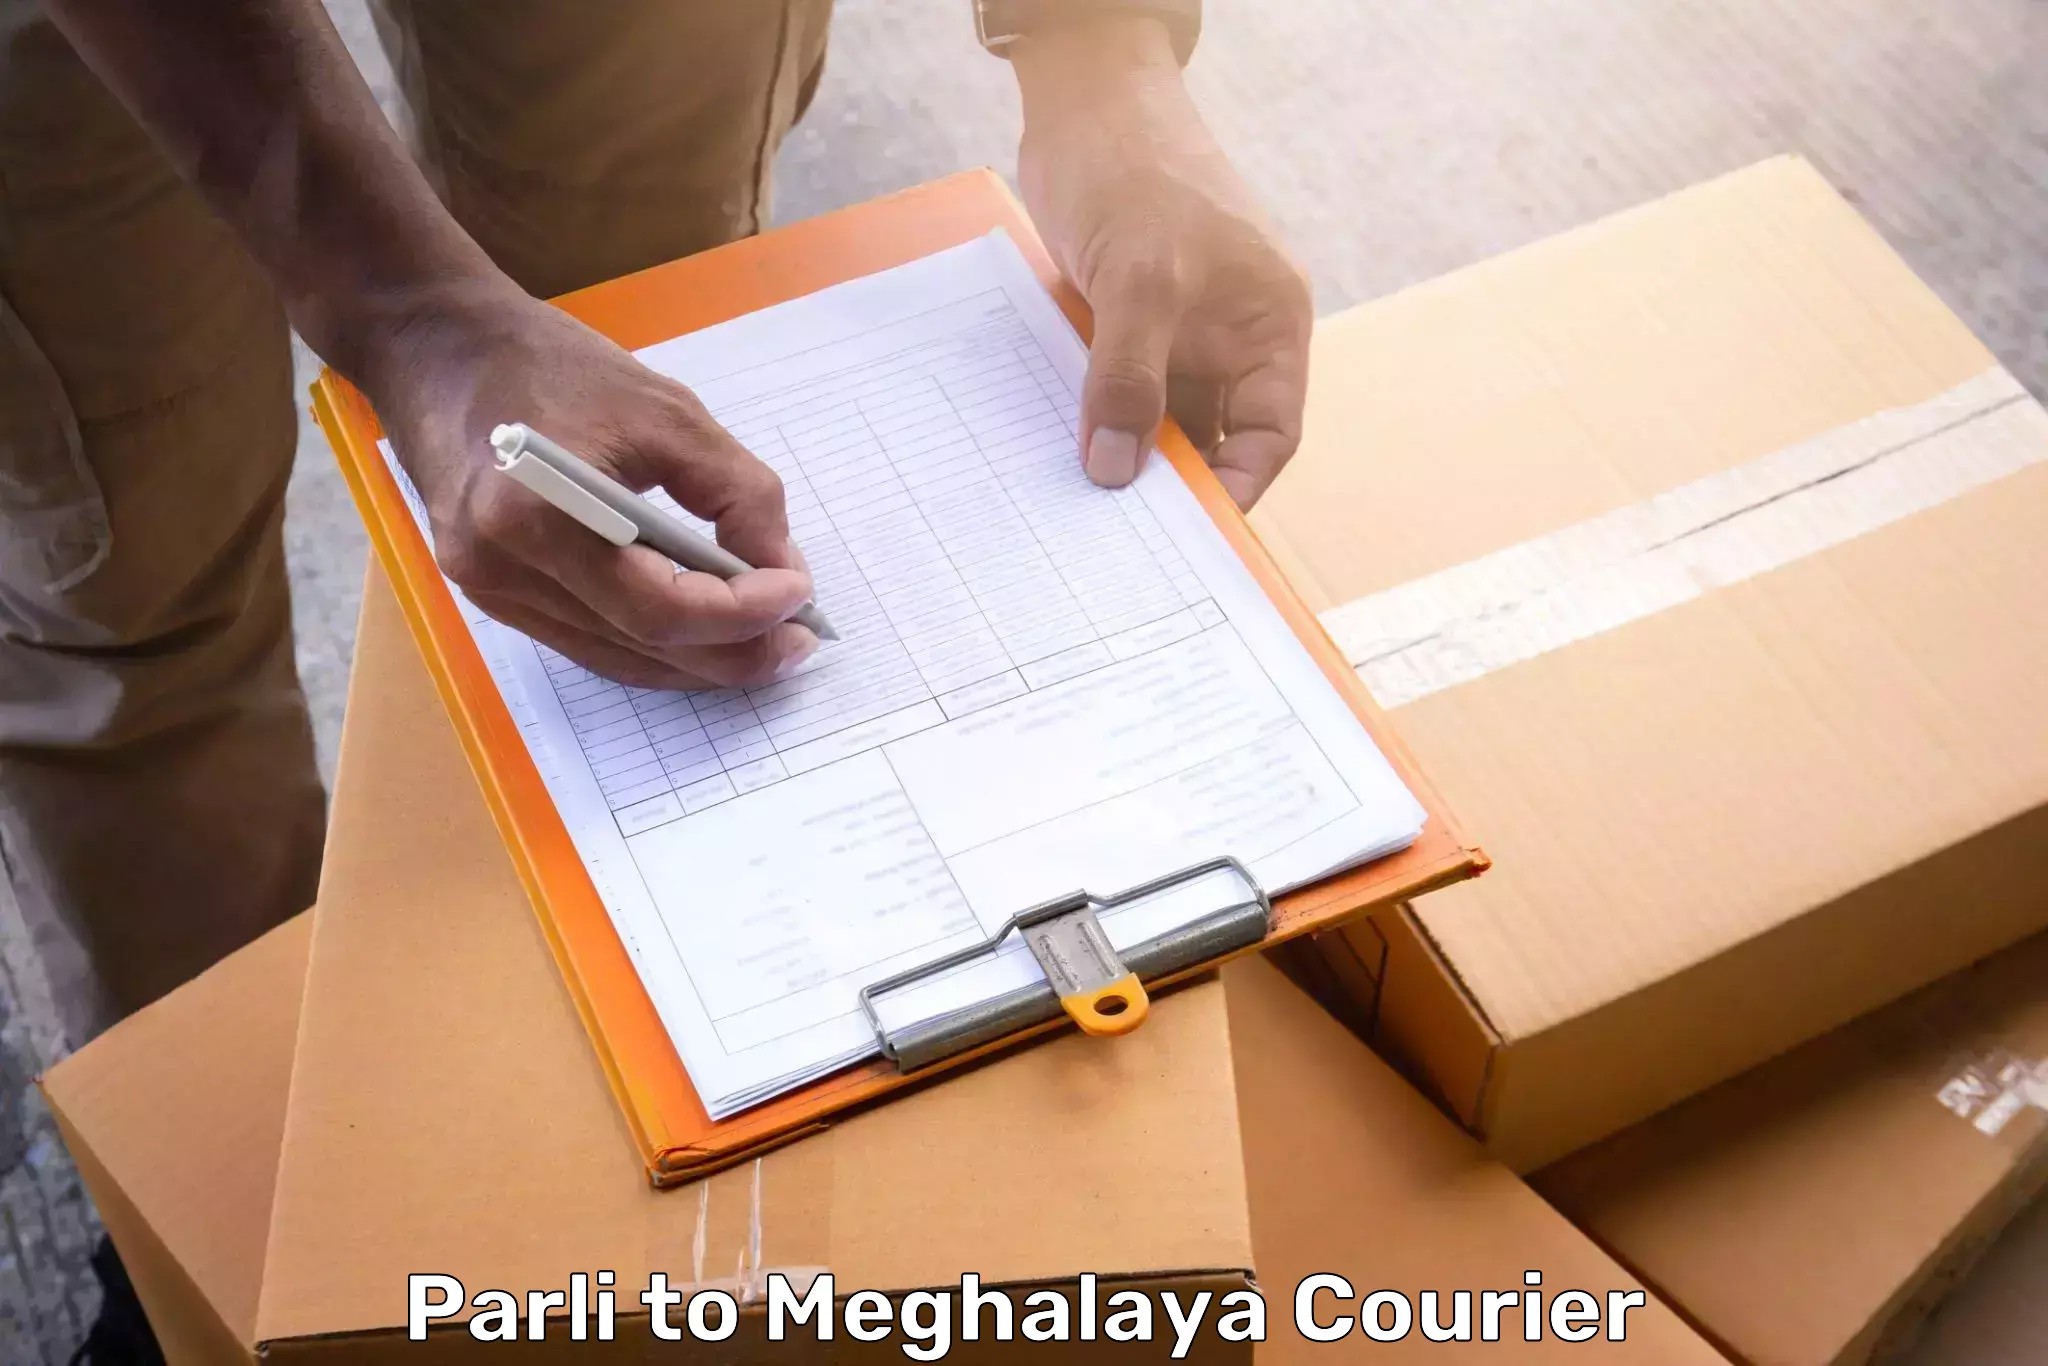 Emergency baggage service Parli to Meghalaya